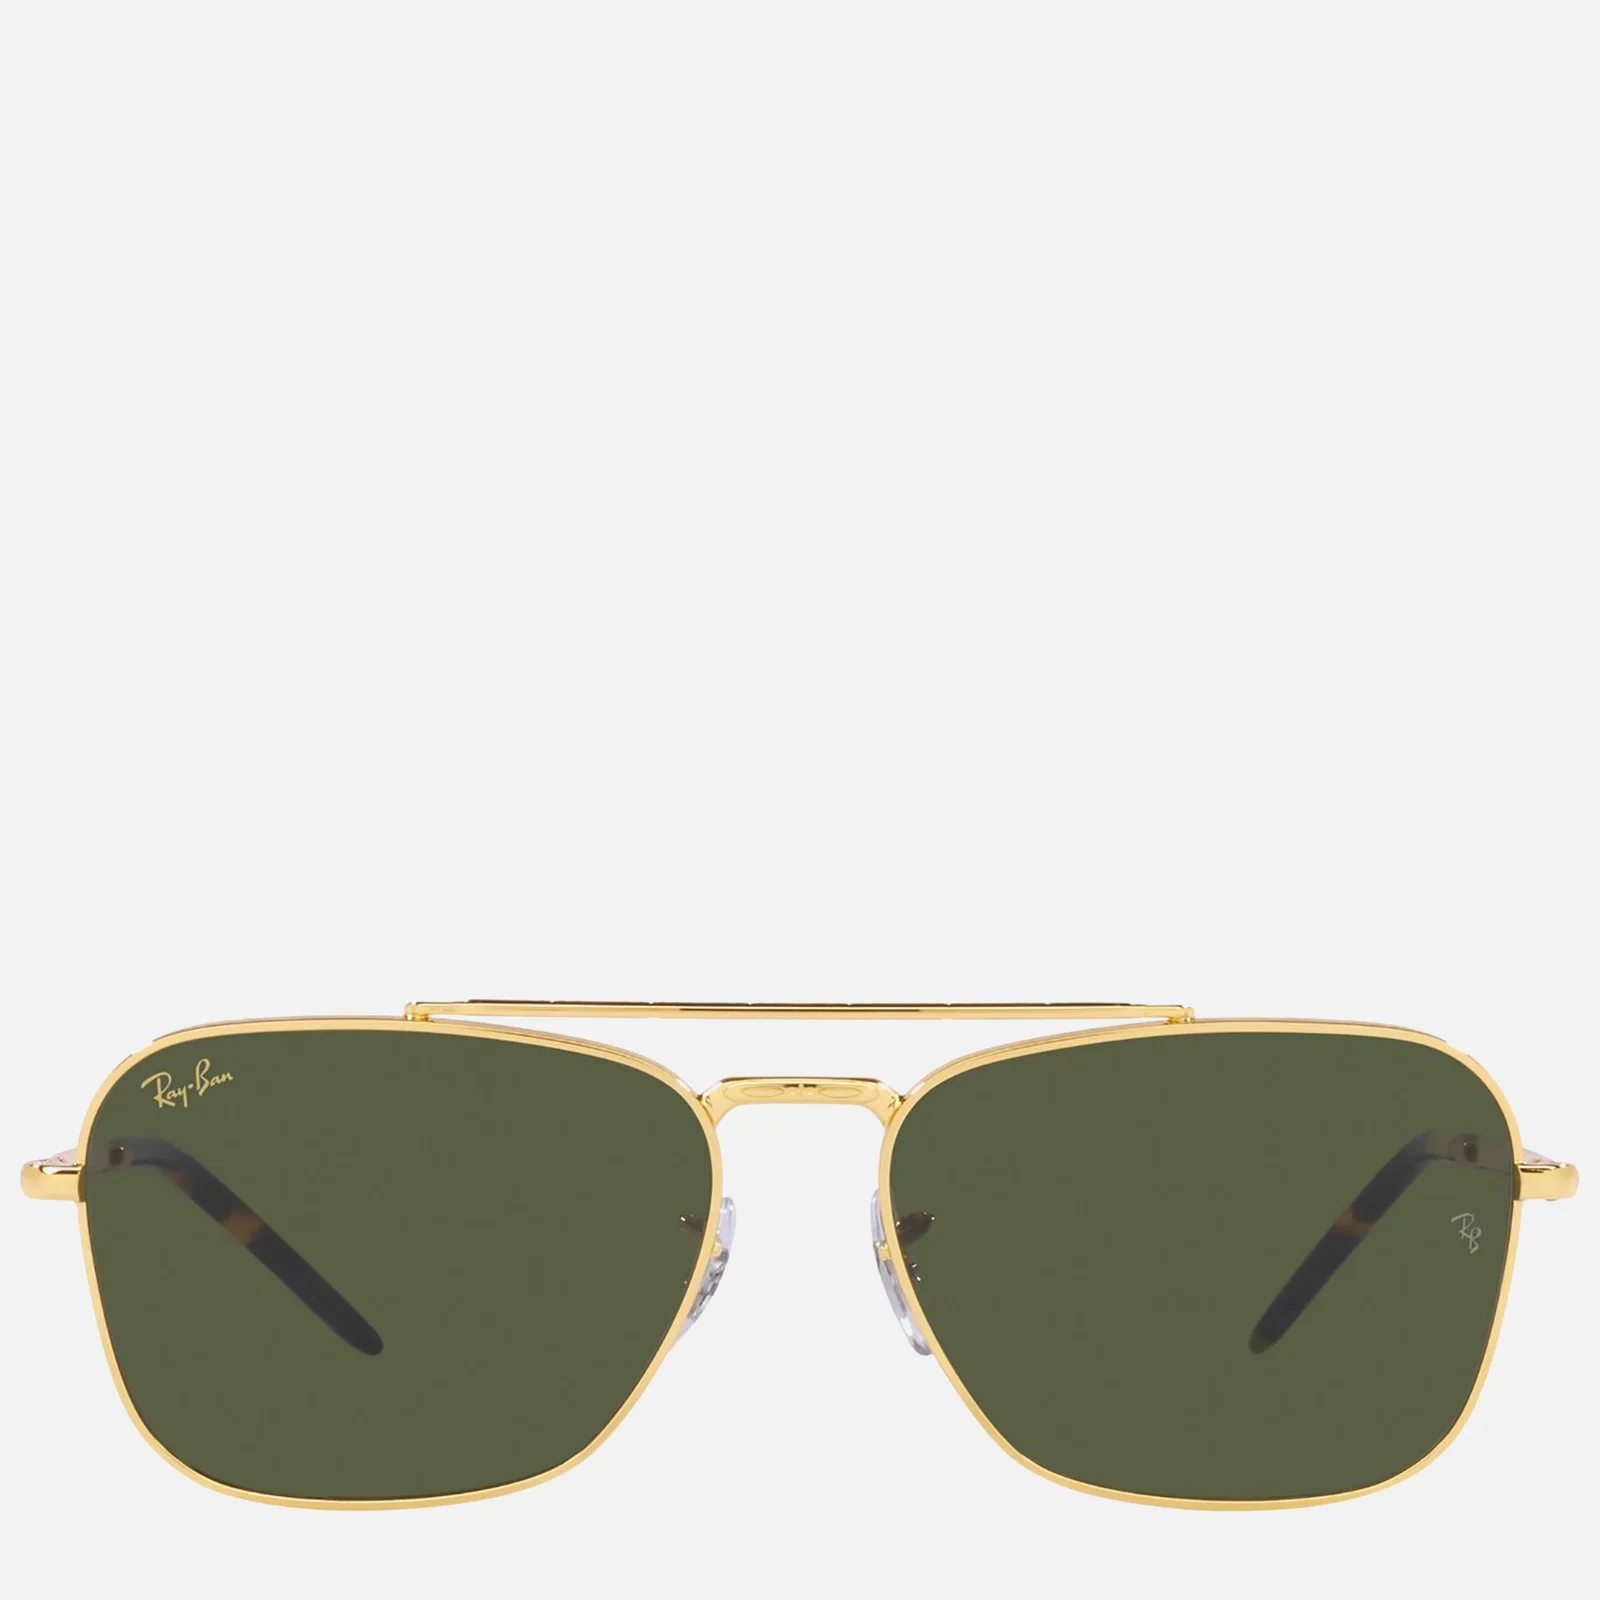 Ray-Ban Aviator Sunglasses - Gold Image 1